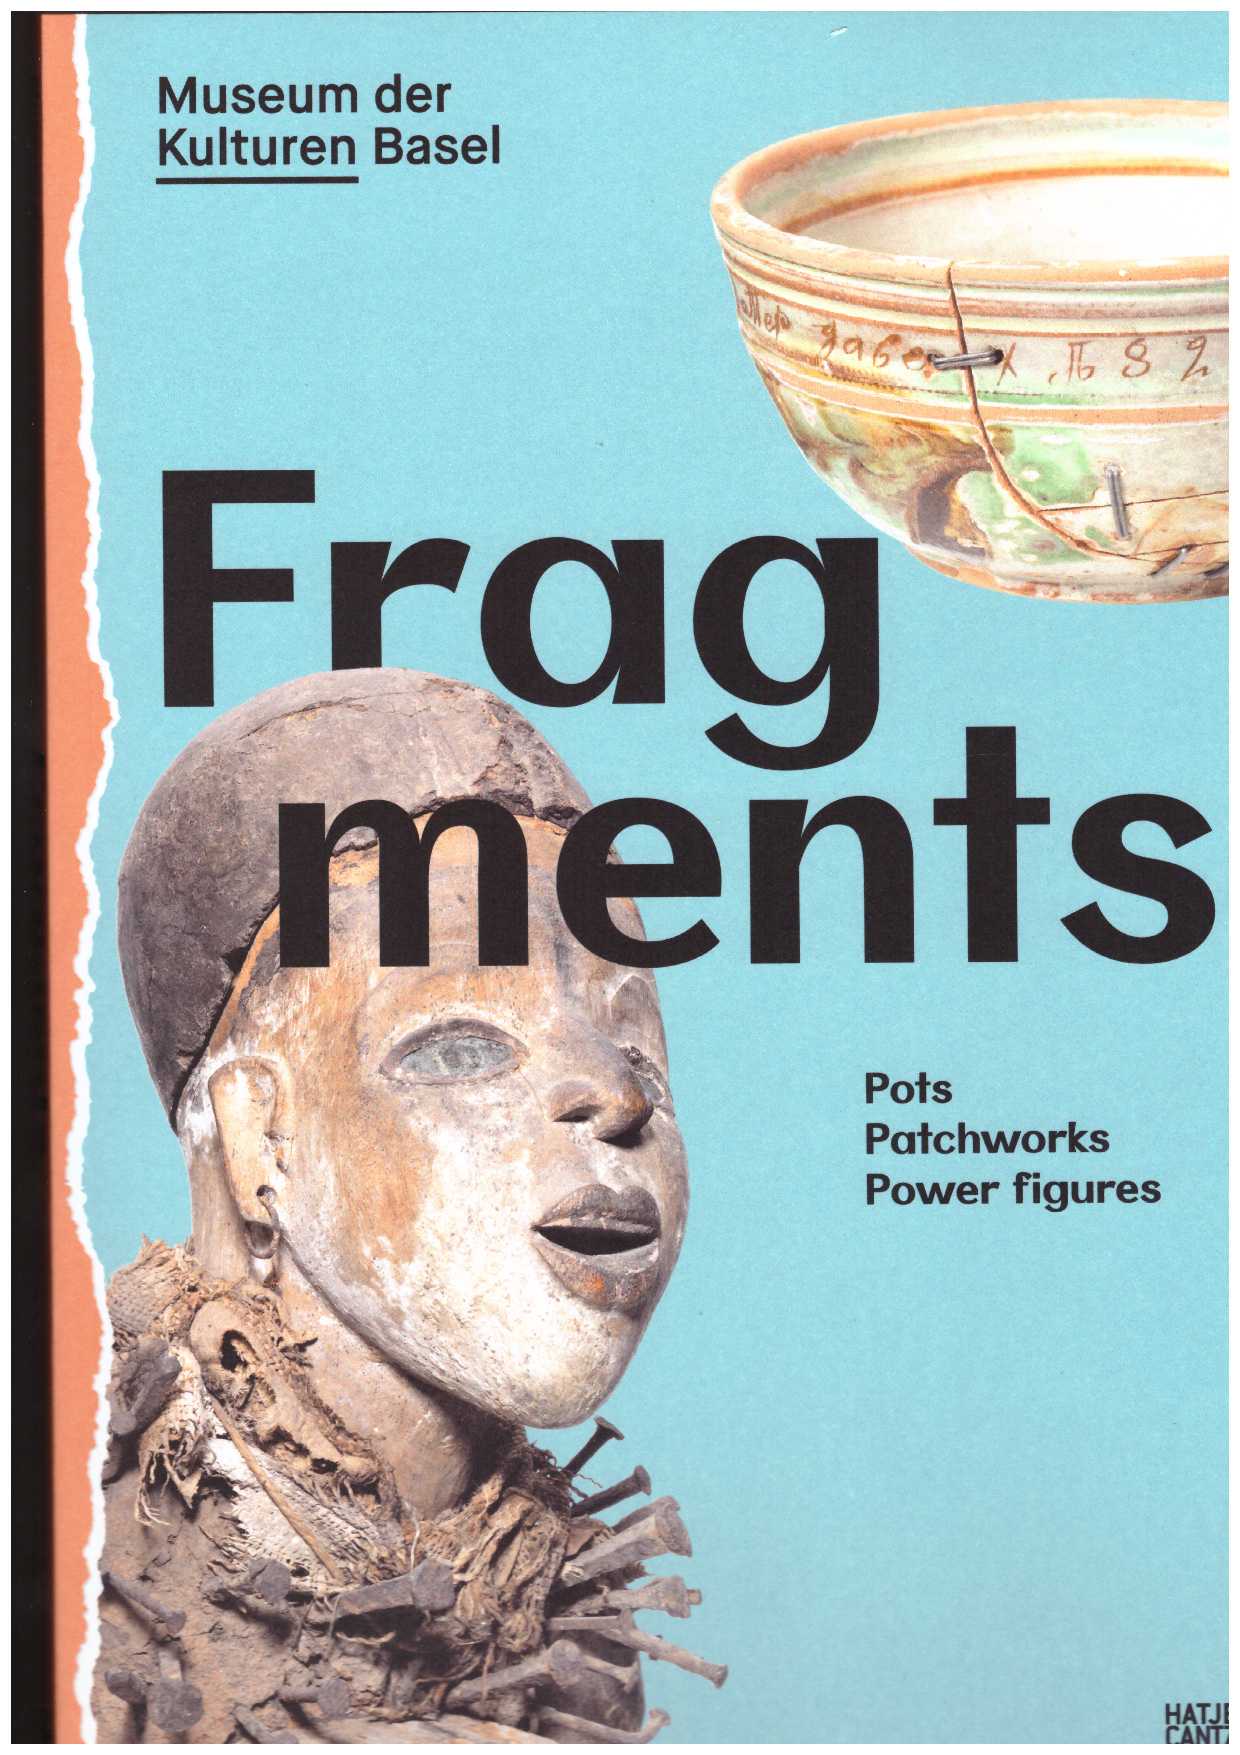 SCHIMD, Anna (ed) - Fragments. Pots, Patchworks, Power Figures